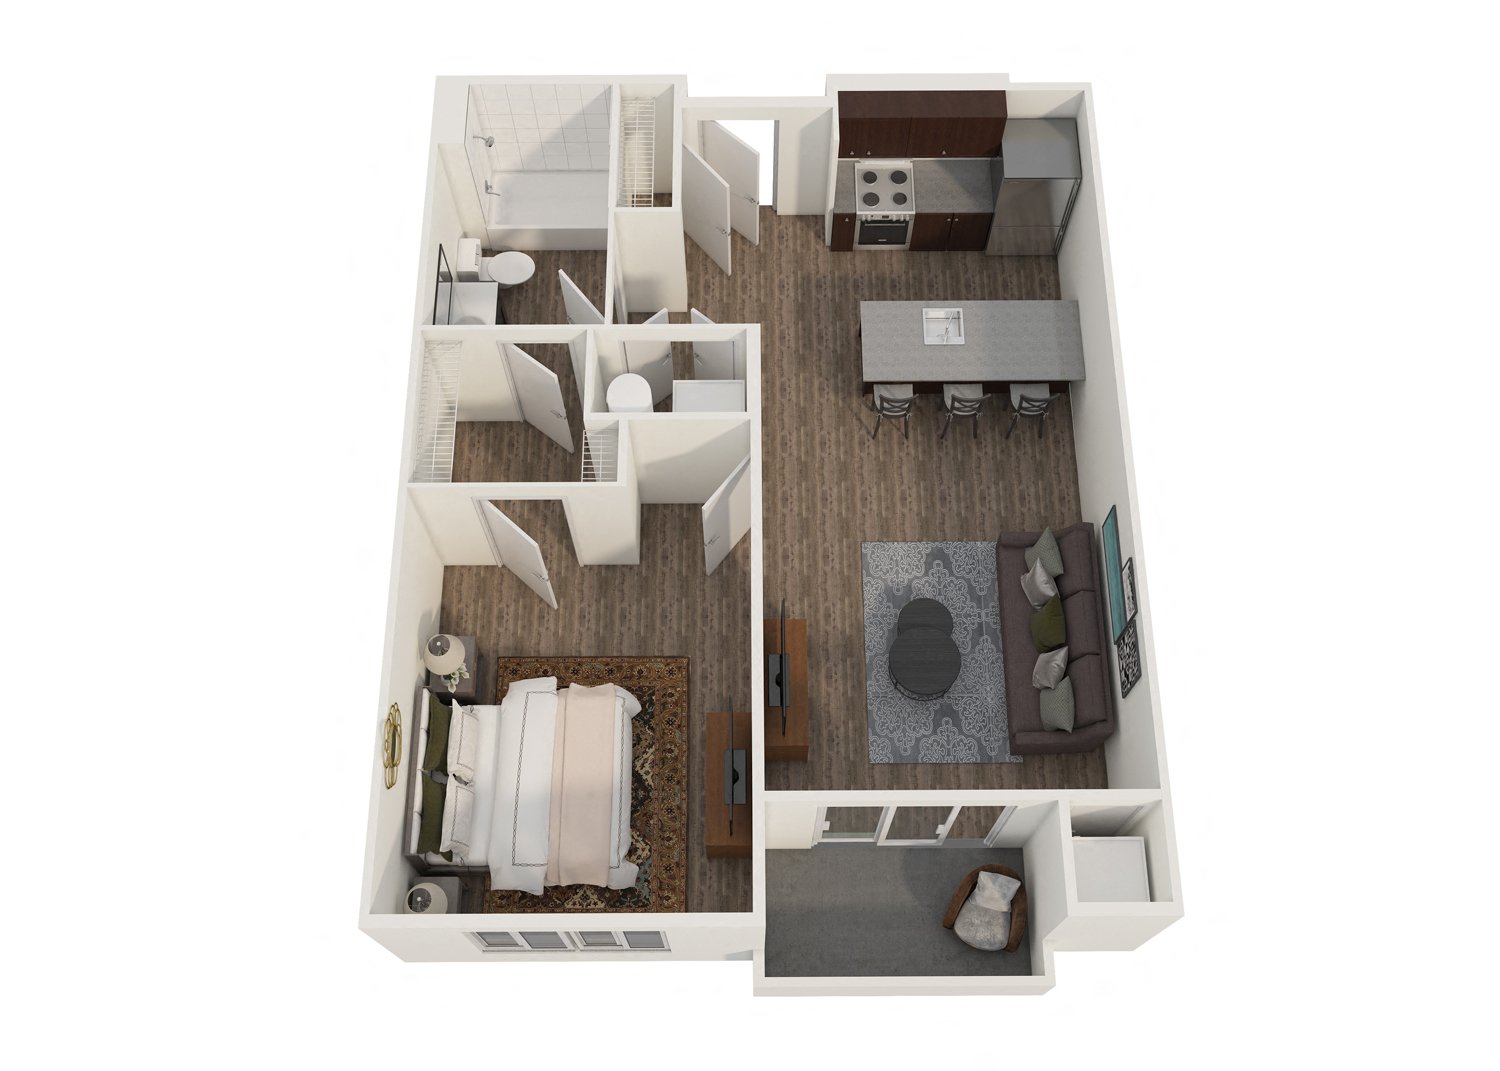 1 Bedroom Apartment Cedar 619 Square Feet